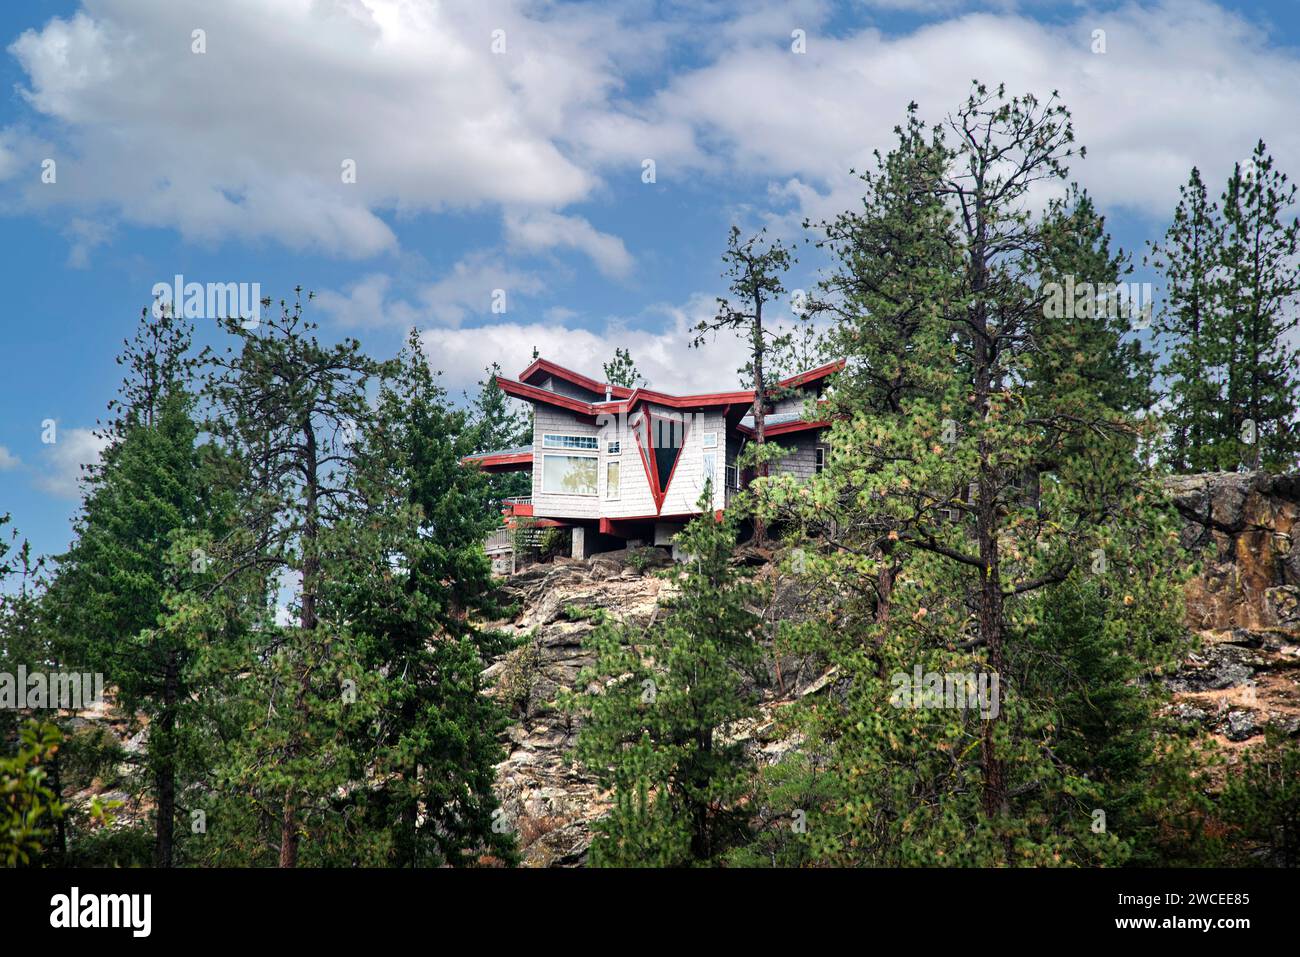 House on edge of precipice overlooking Spokane River, Washington, USA Stock Photo